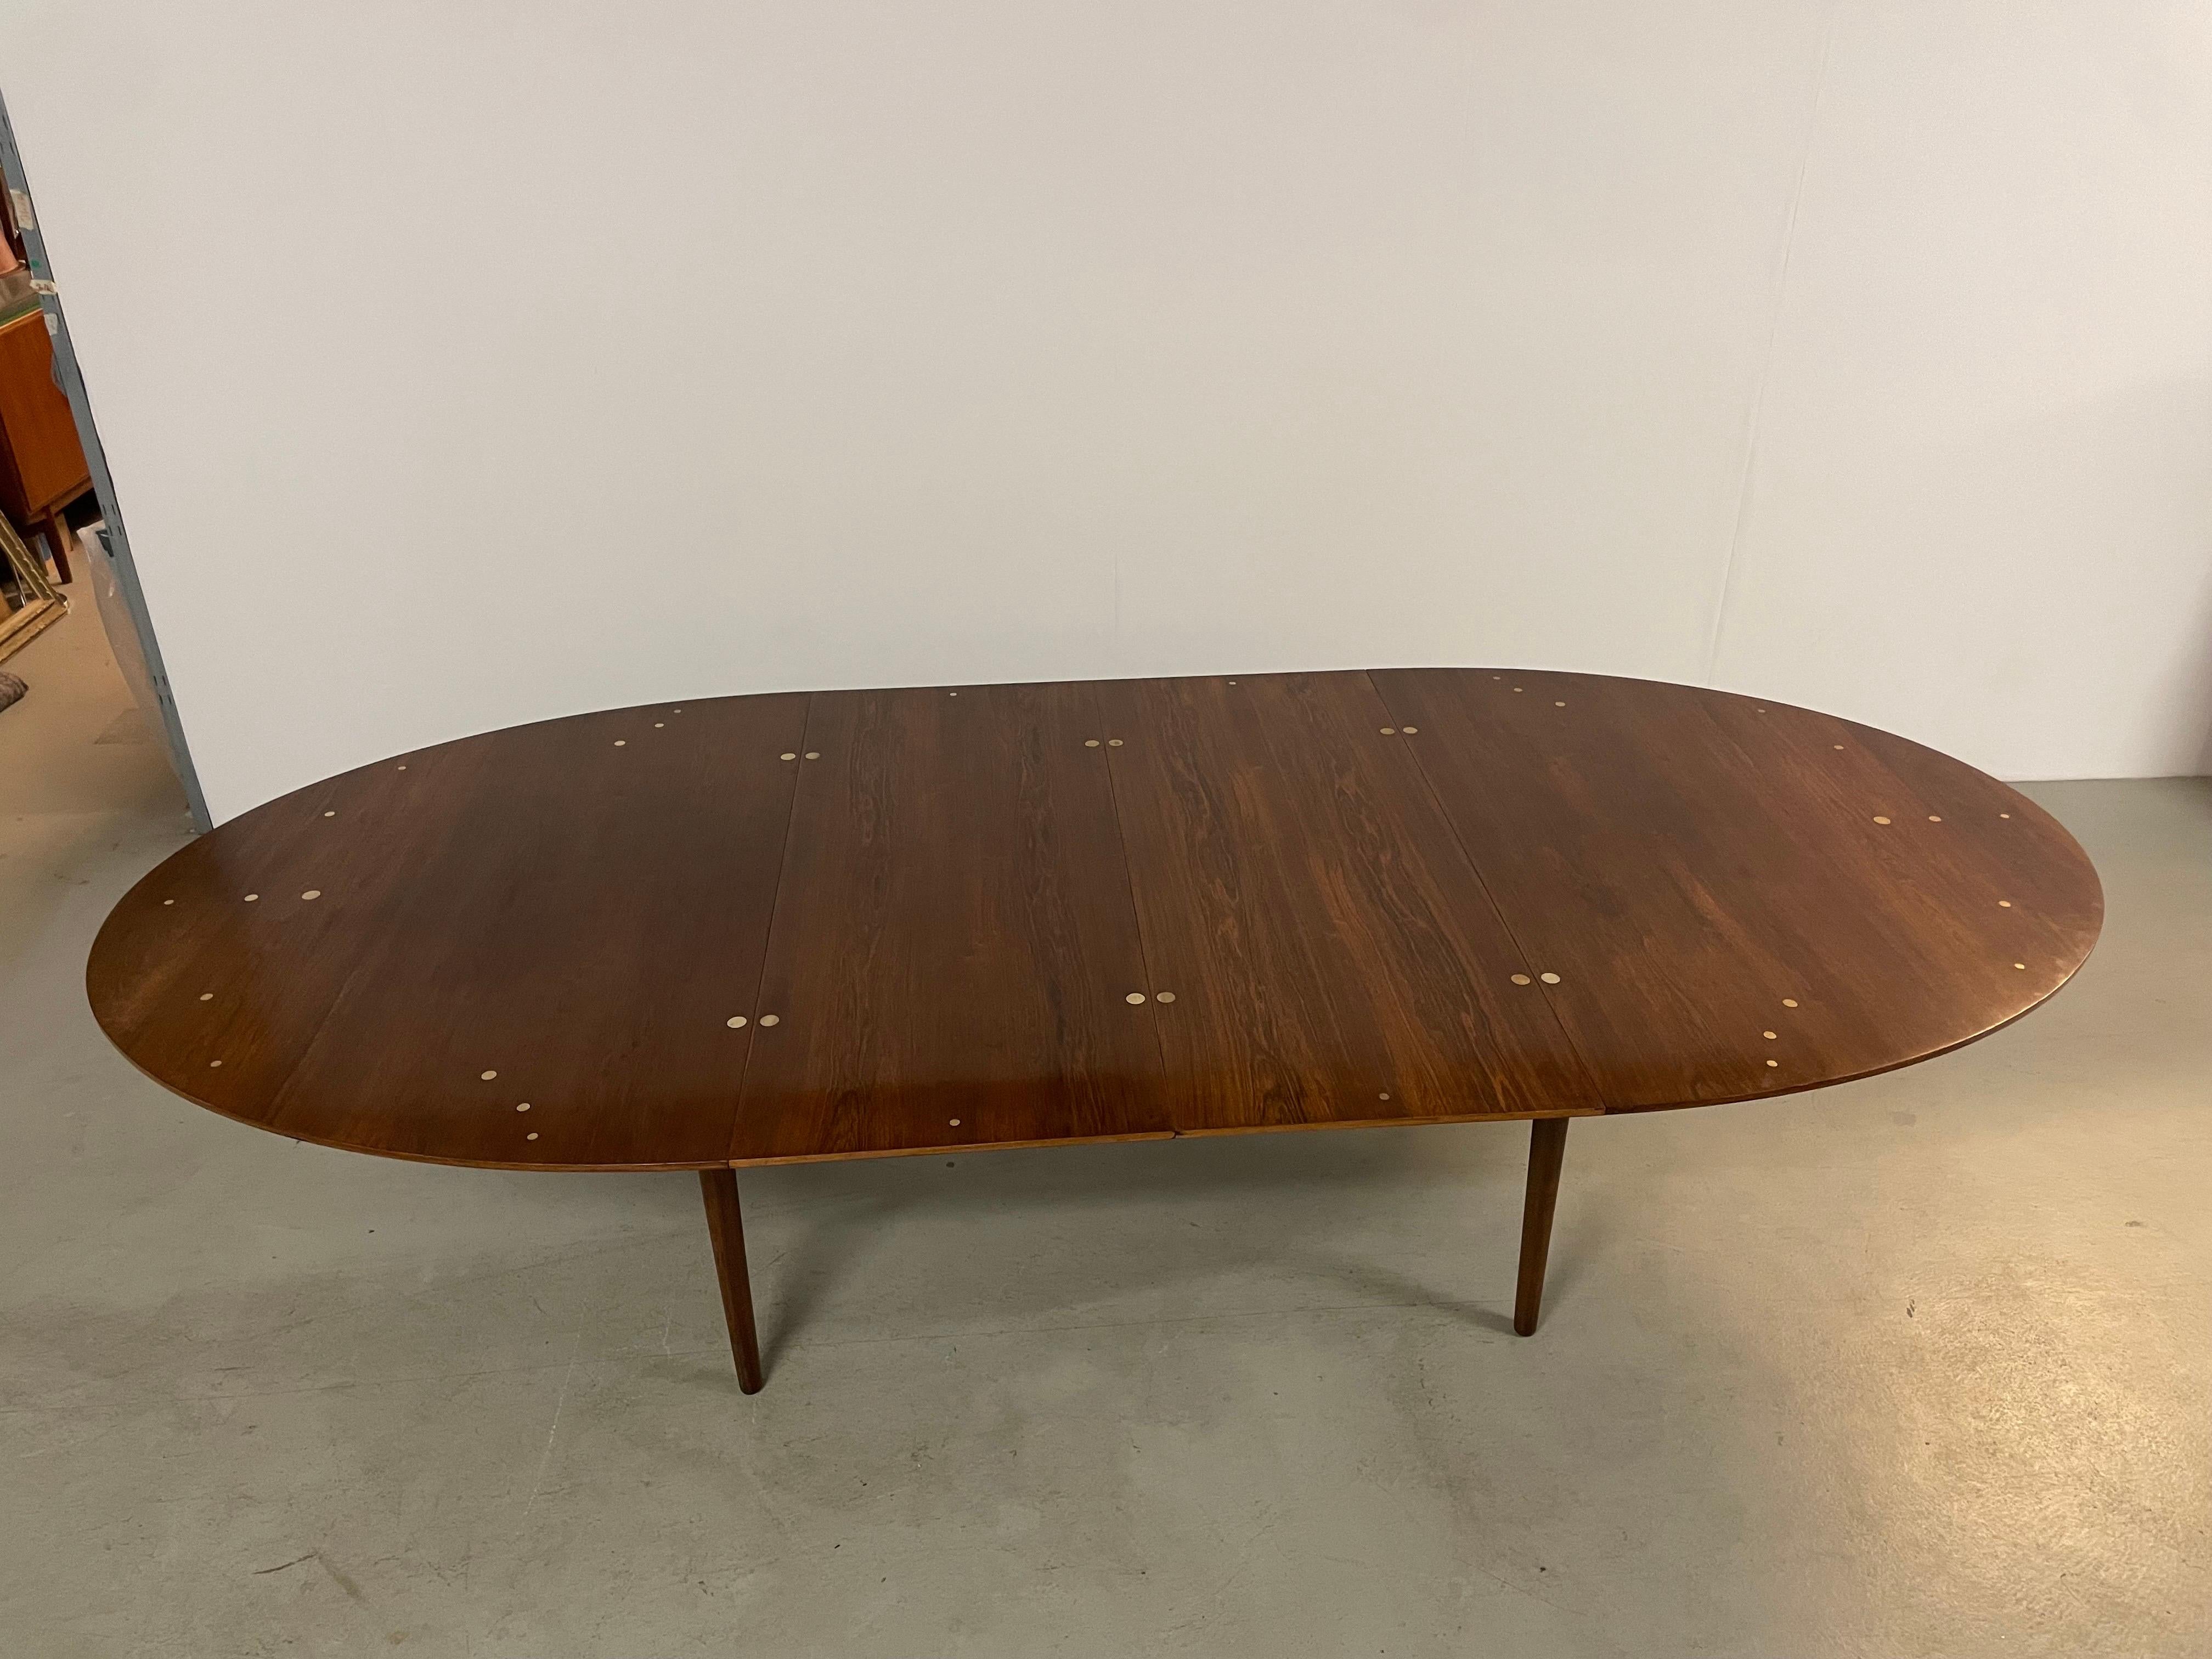 Leather Finn Juhl Model Judas Dining Table in Palisander 1950s For Sale